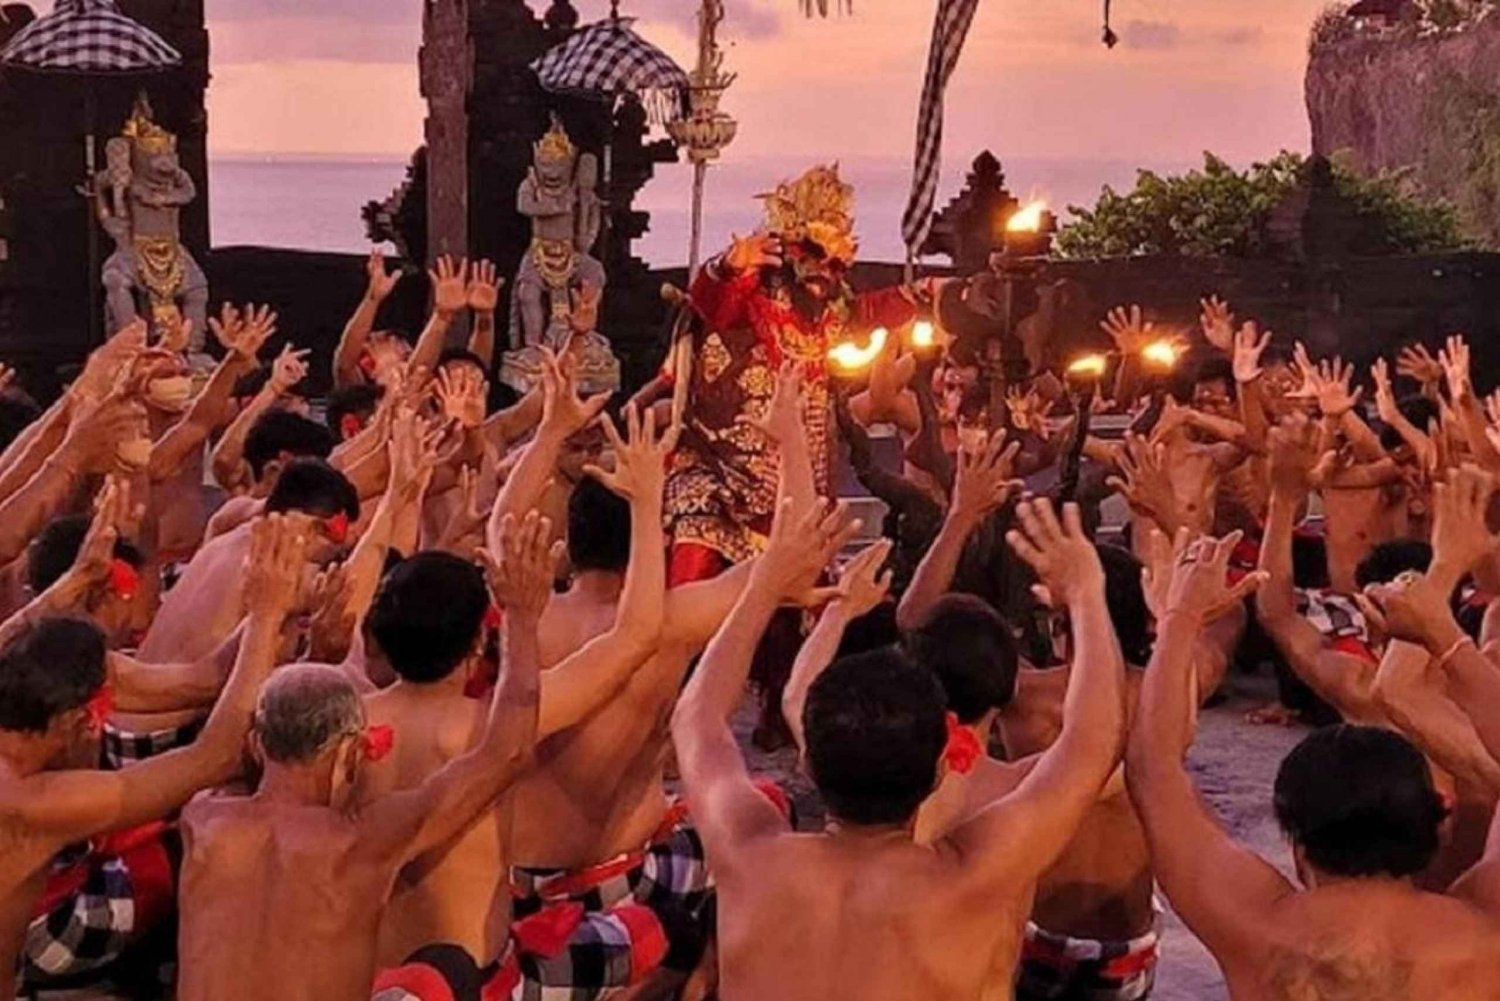 Bali - Halvdagsutflykt Halvdagsutflykt till Uluwatu-templet och Kecak Fire Dance Show